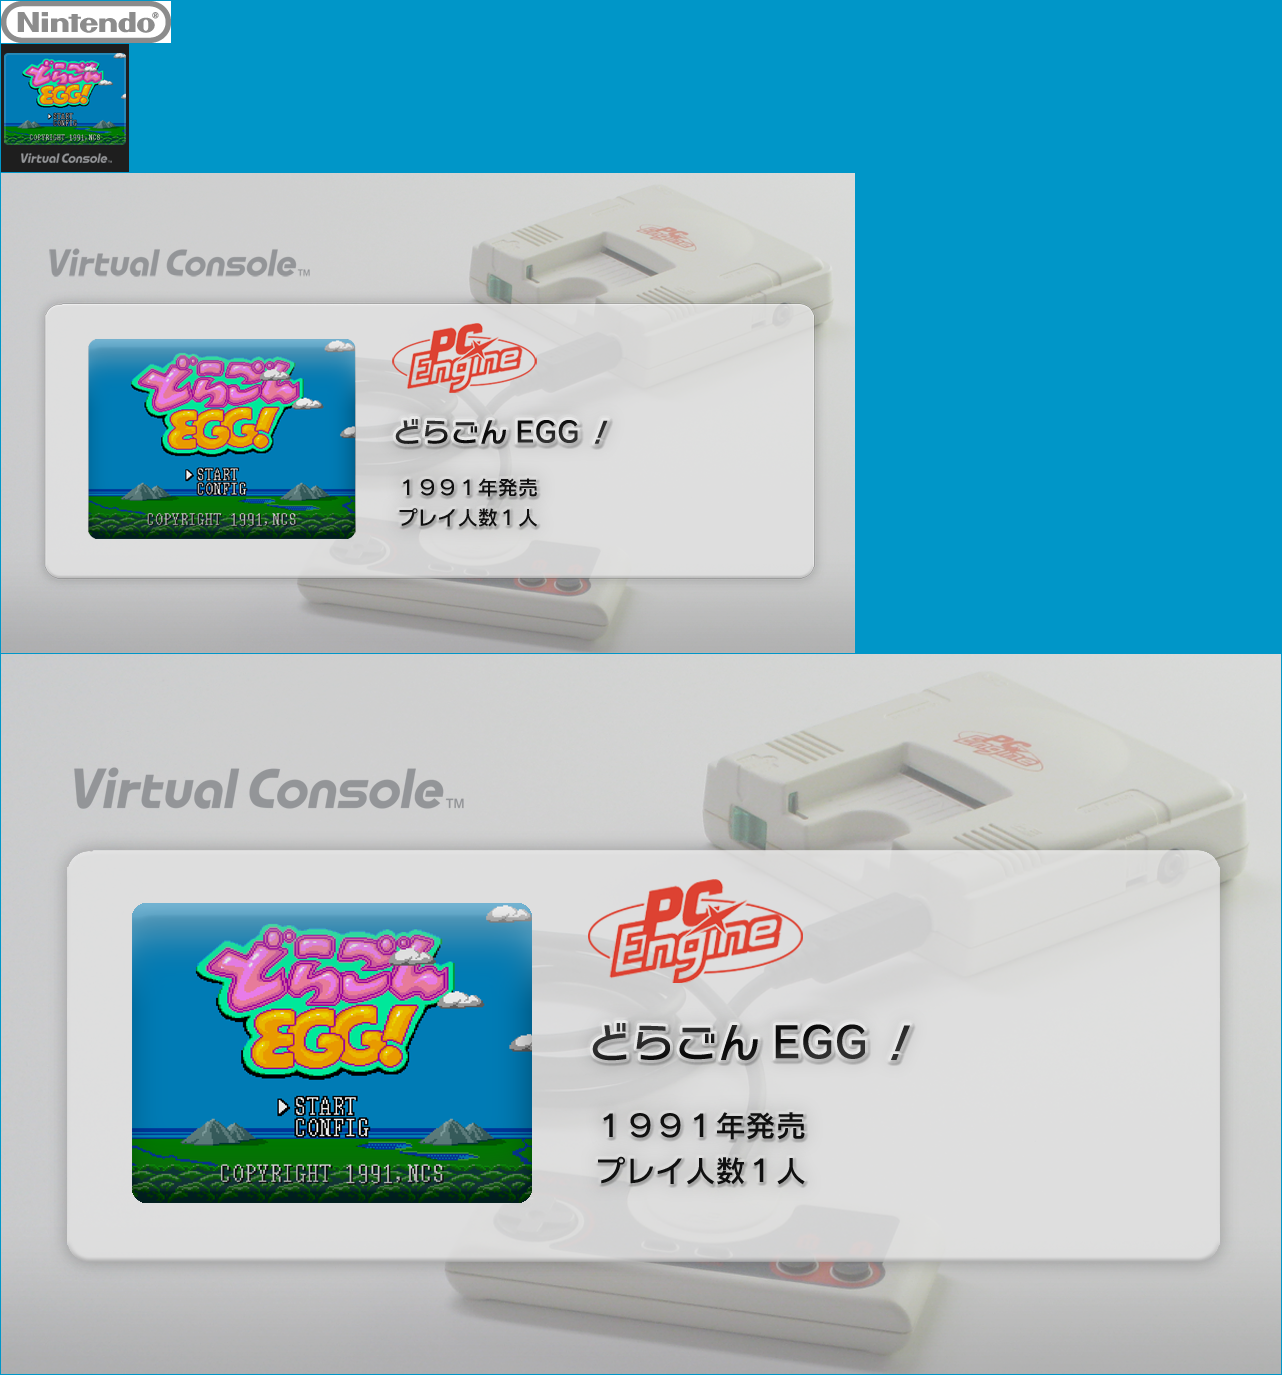 Virtual Console - Dragon EGG!